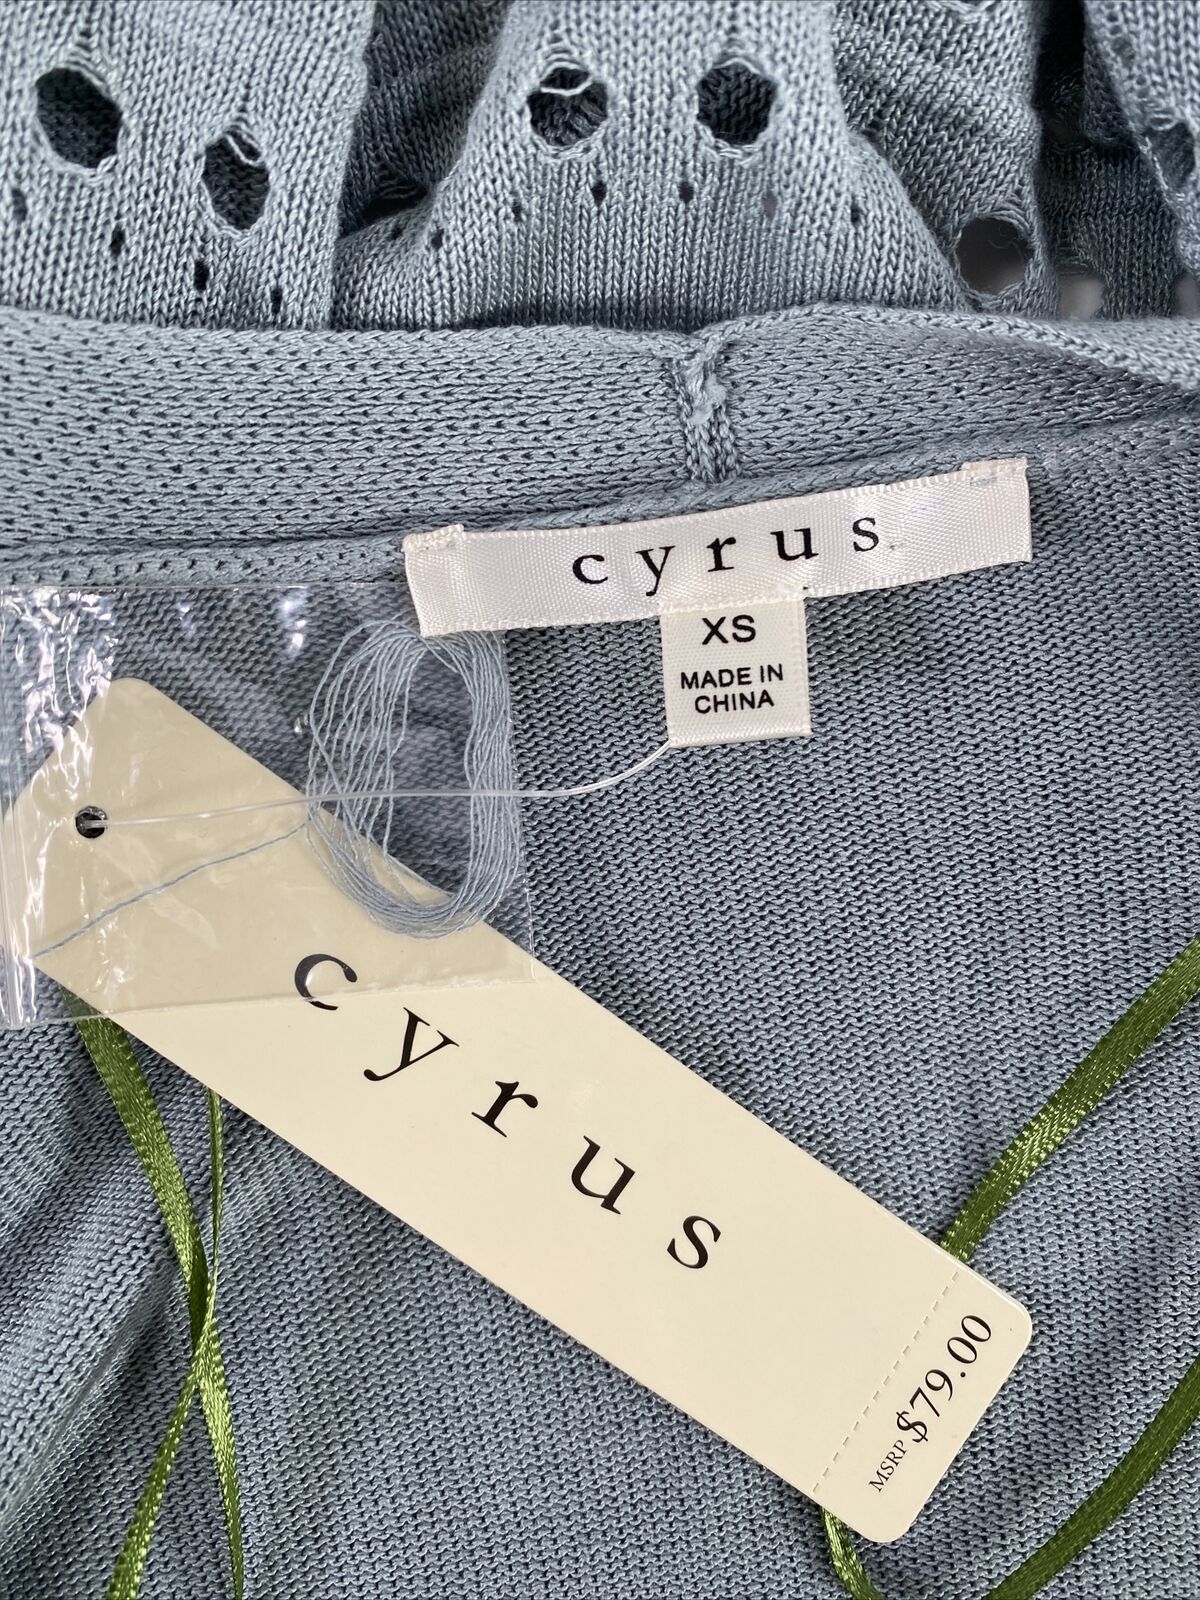 NEW Cyrus Women's Blue Knit Lightweight Cardigan Sweater - XS